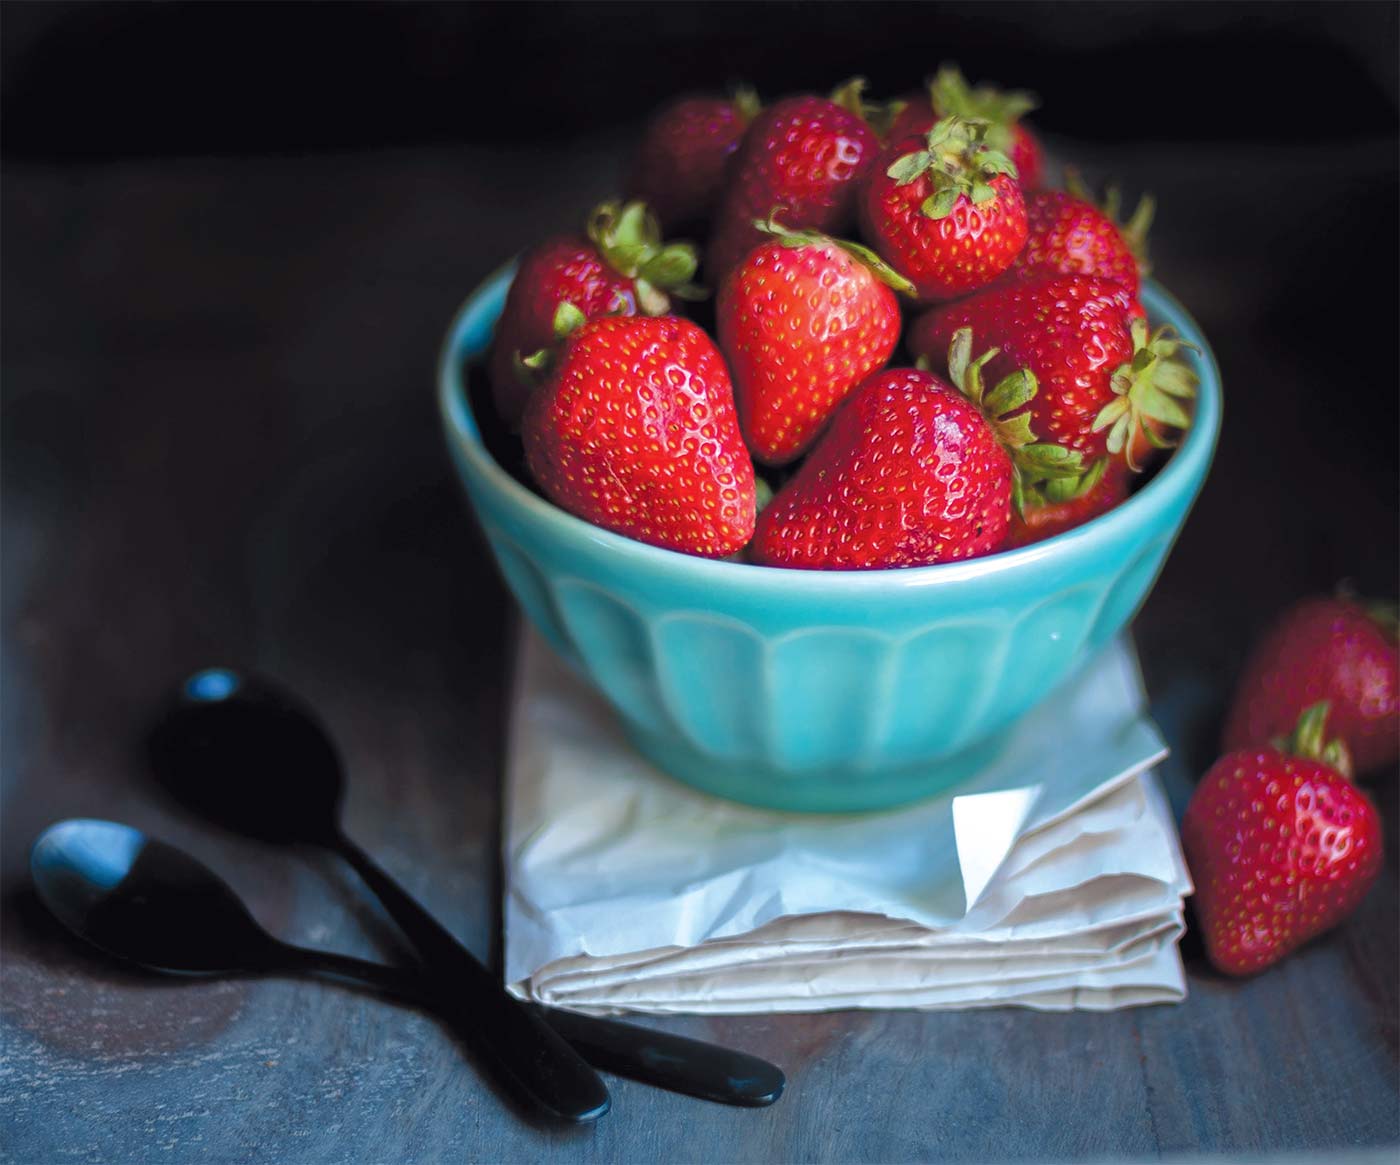 blue bowl of strawberries